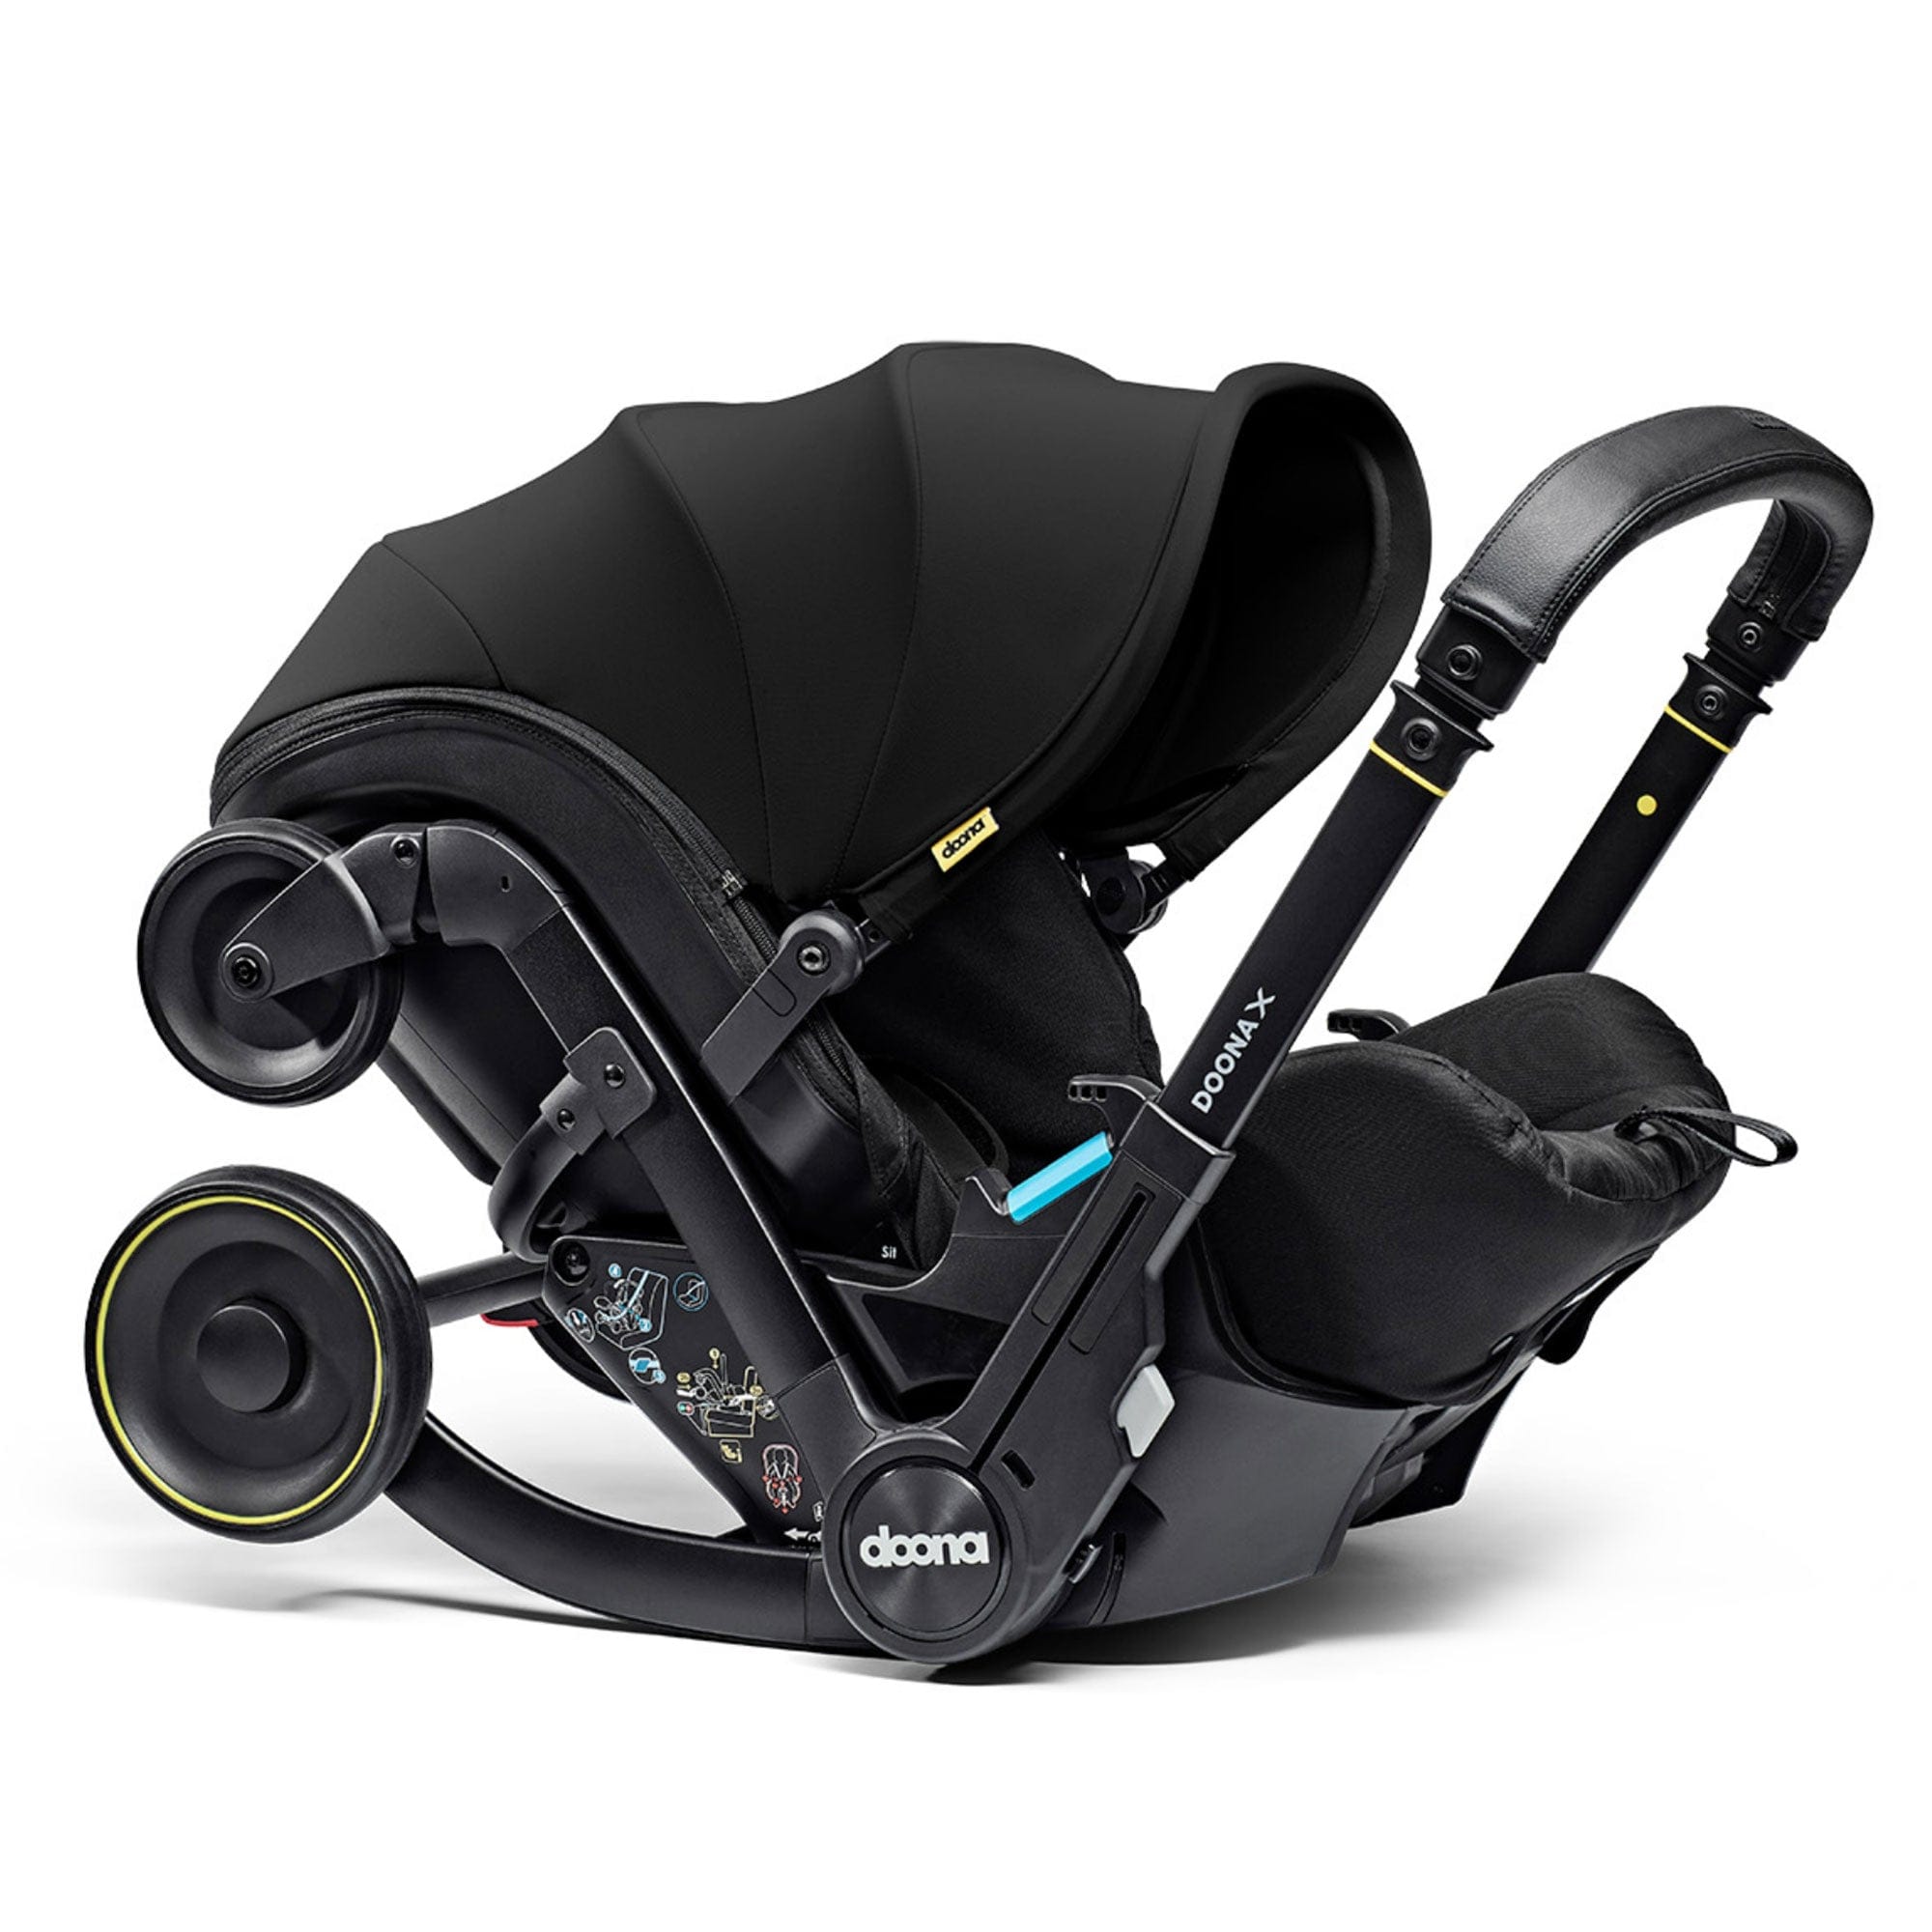 Doona baby car seats Doona X Infant Car Seat Stroller and X Isofix Base (Nitro Black) 14569-NIT-BLK